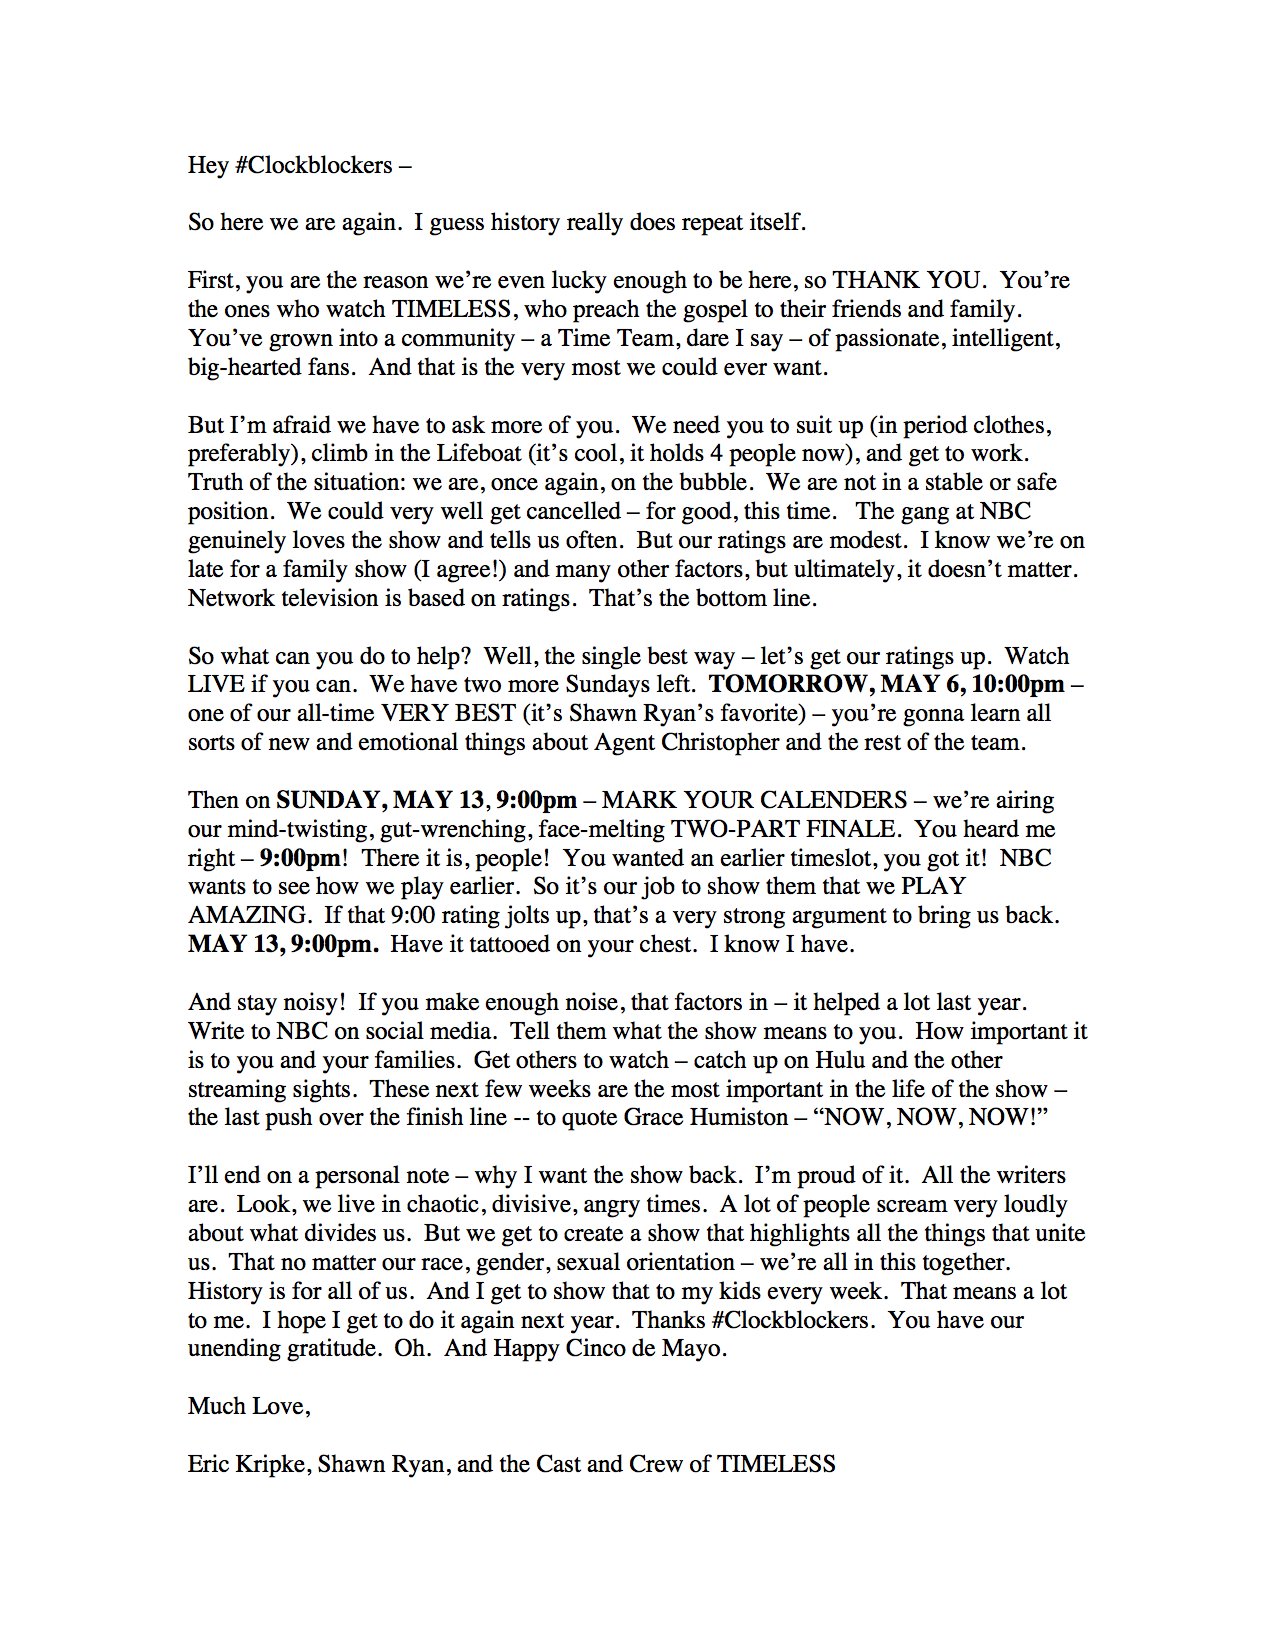 Erick Kripke, Shawn Ryan letter; Timeless season 2 finale; Timeless TV show on NBC: season 3 (canceled or renewed?)